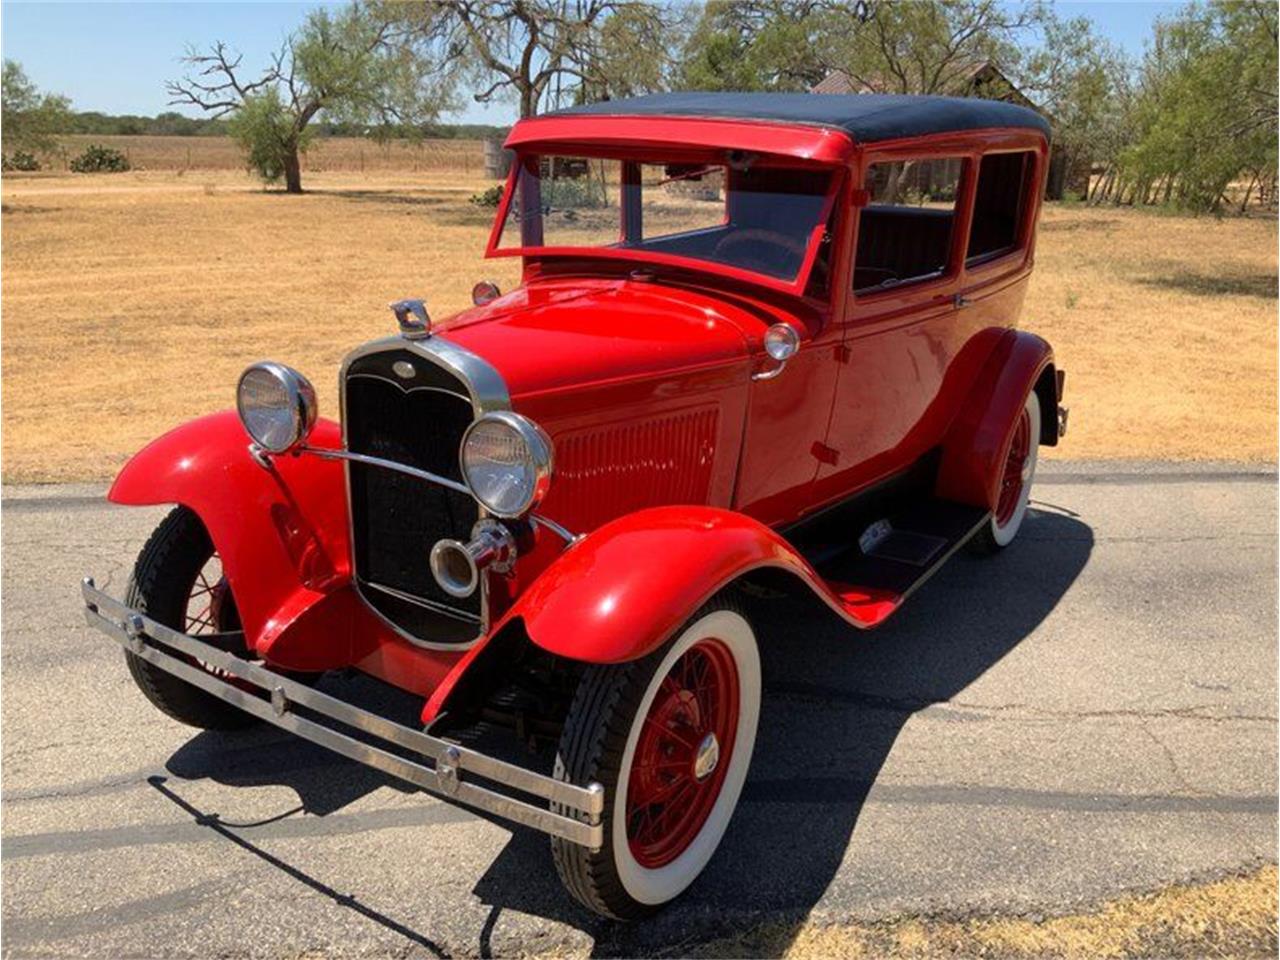 For Sale: 1931 Ford Aerostar in Fredericksburg, Texas for sale in Fredericksburg, TX